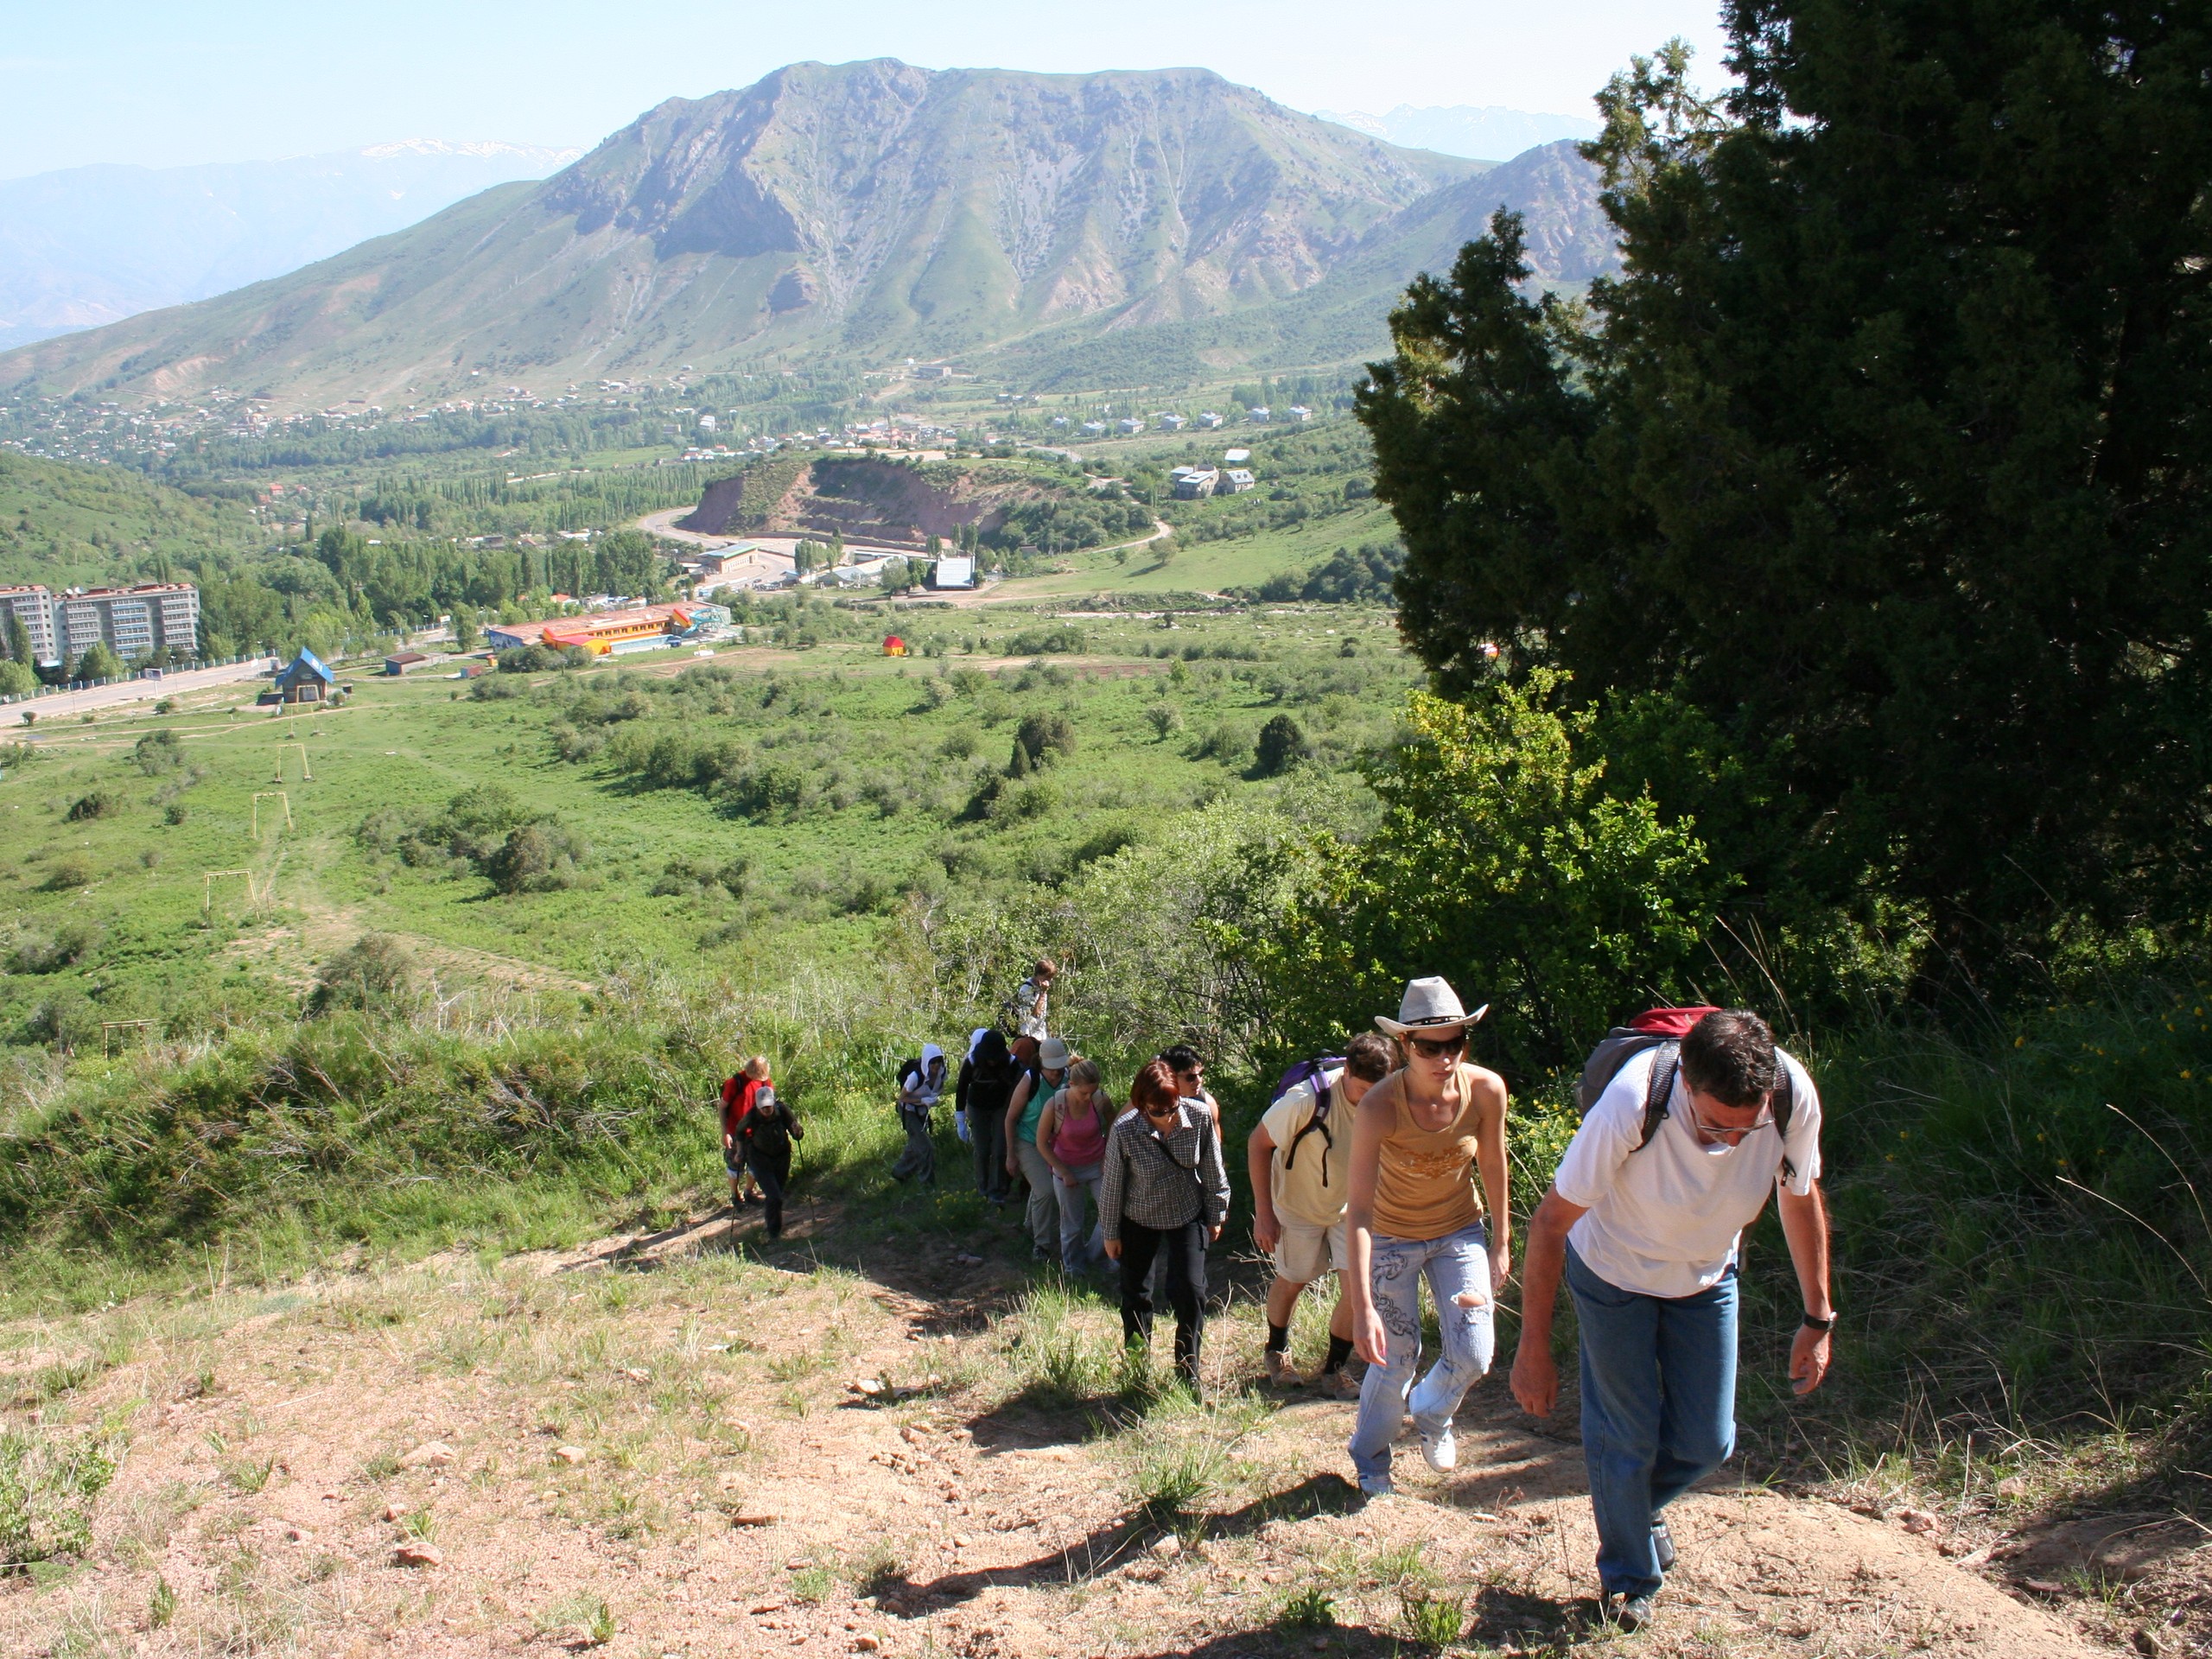 Ascending the small hill in Uzbekistan